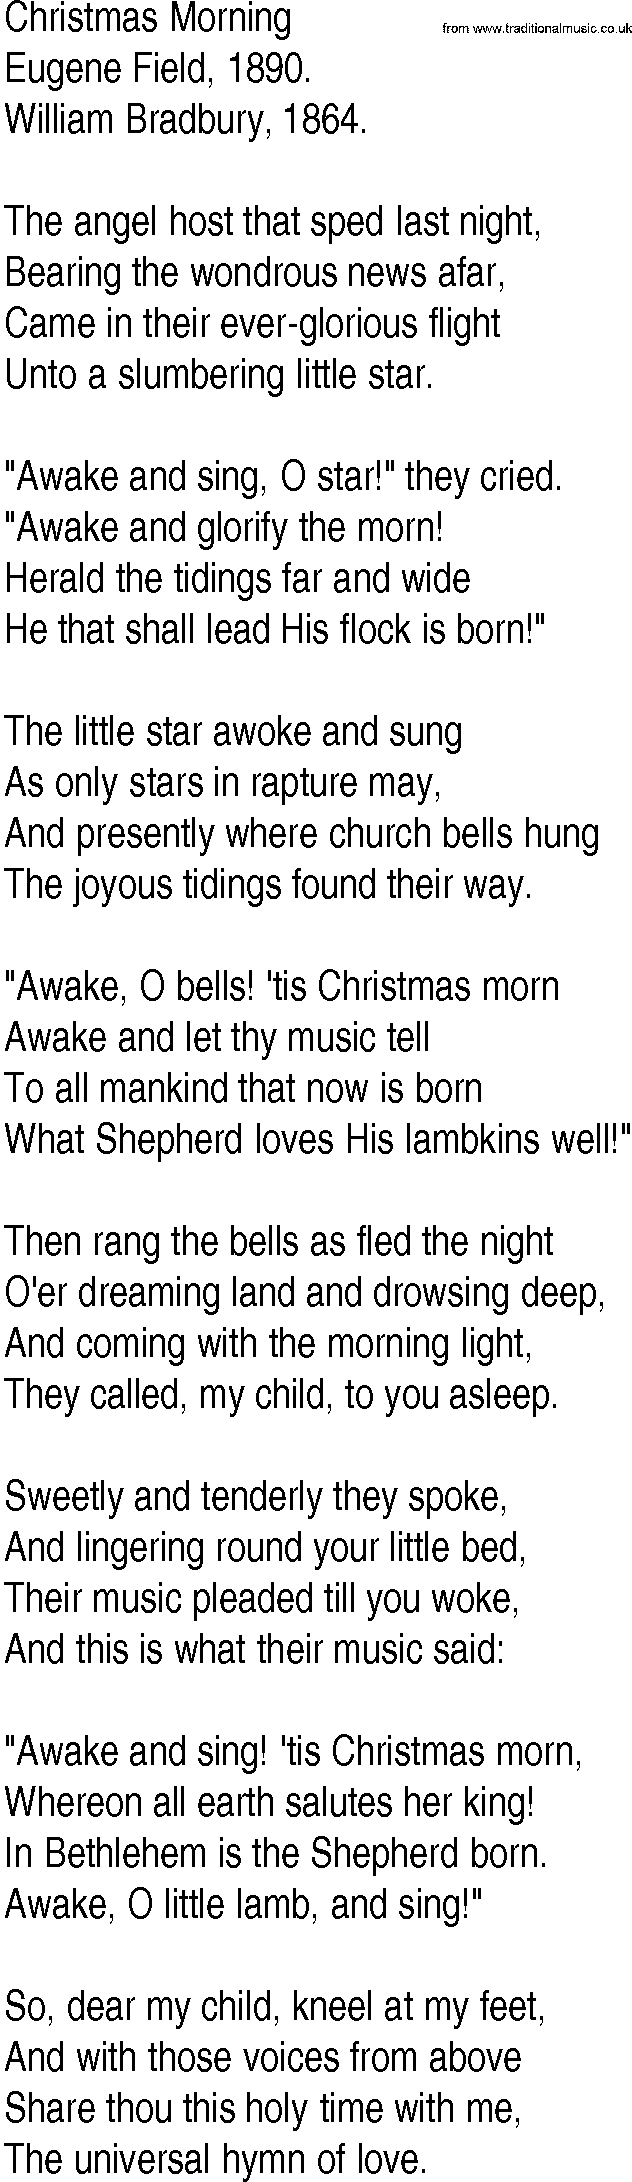 Hymn and Gospel Song: Christmas Morning by Eugene Field lyrics